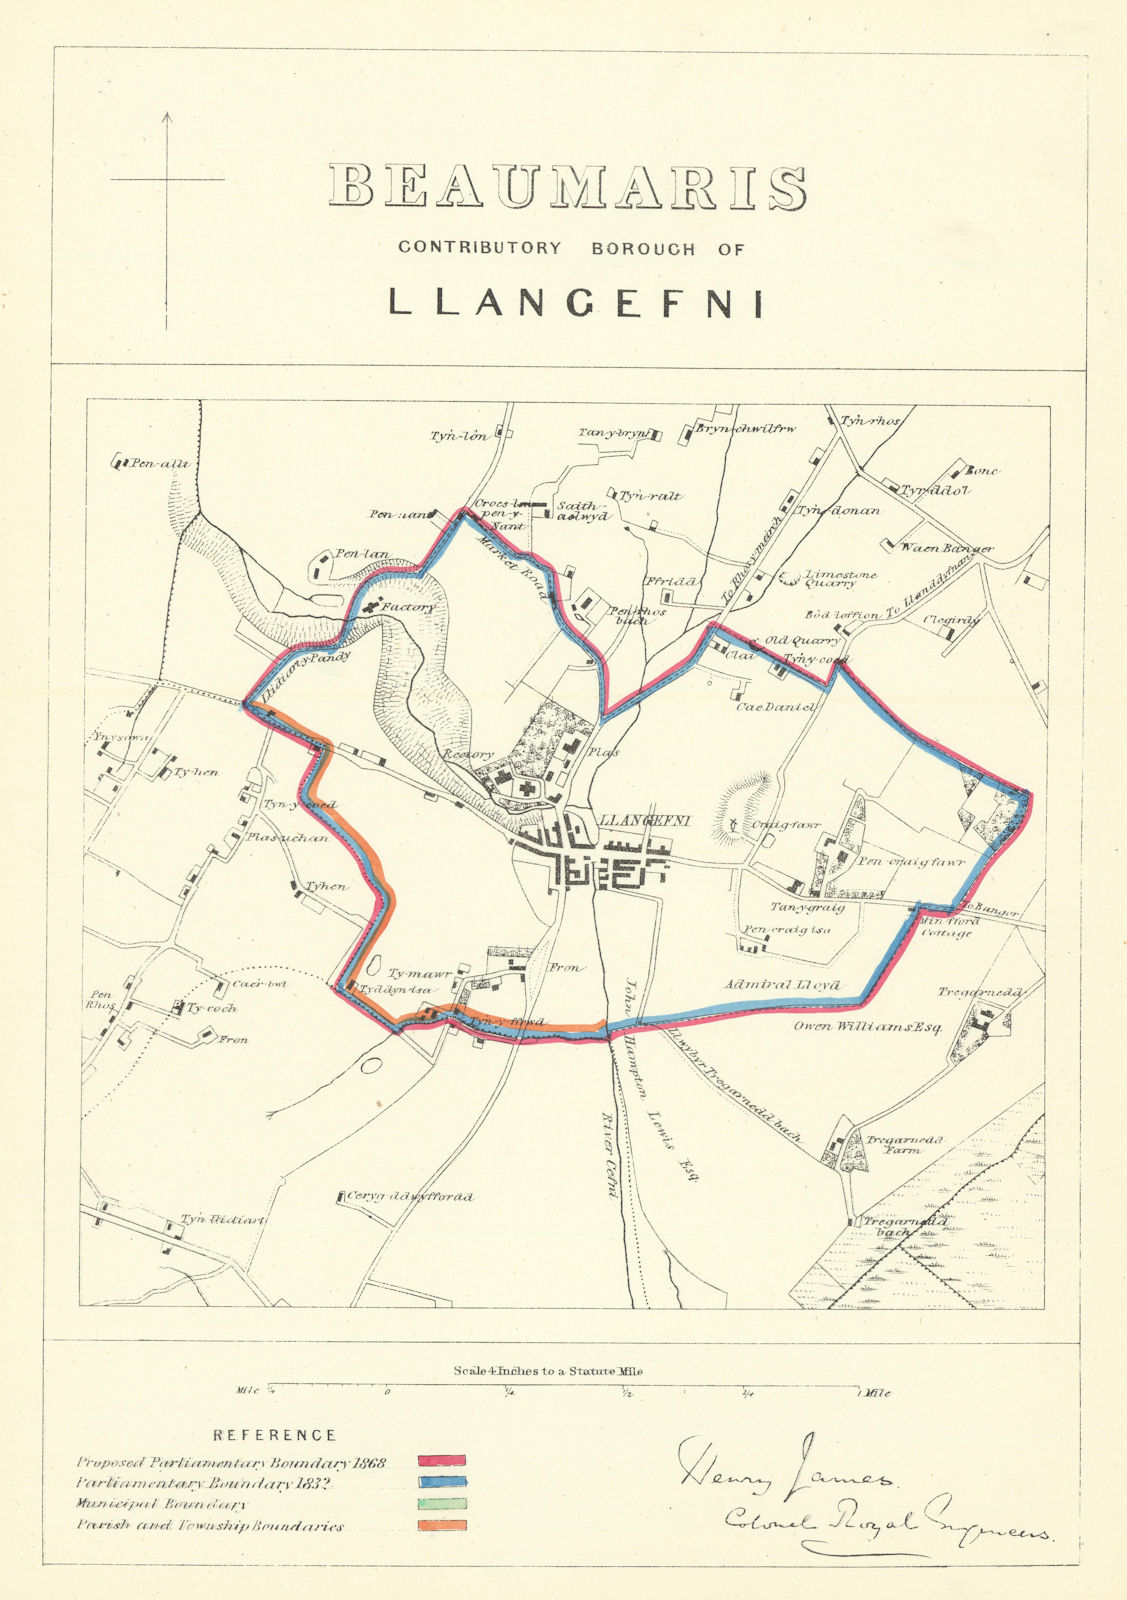 Beaumaris Contributory Borough of Llangefni. JAMES. Boundary Commission 1868 map